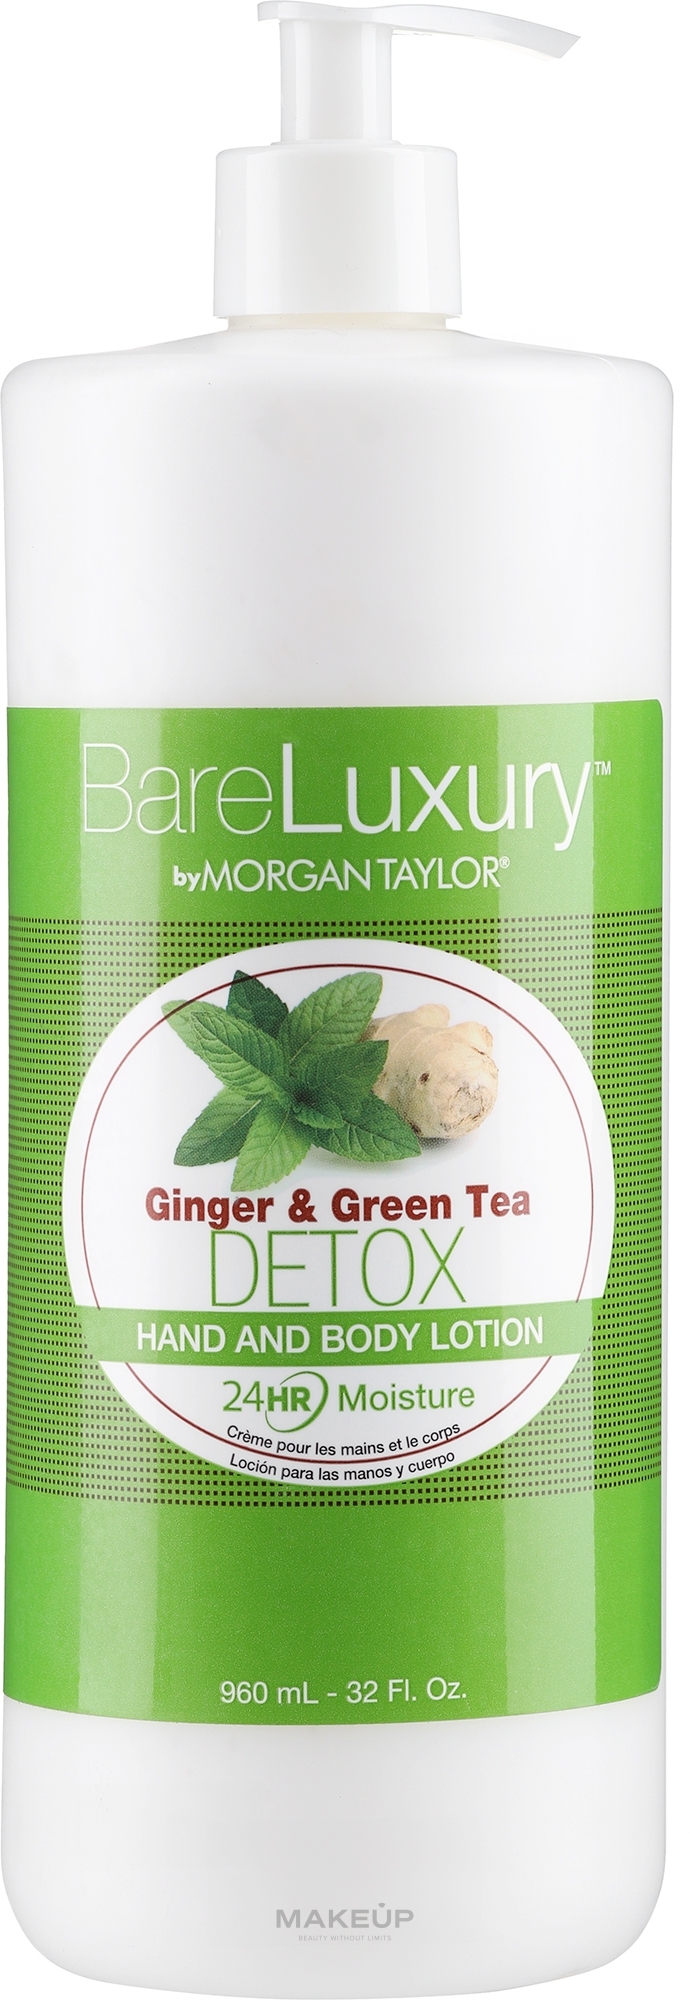 Balsam do rąk i ciała Imbir i zielona herbata - Morgan Taylor Bare Luxury Hand & Body Lotion Ginger & Green Tea Detox — Zdjęcie 960 ml